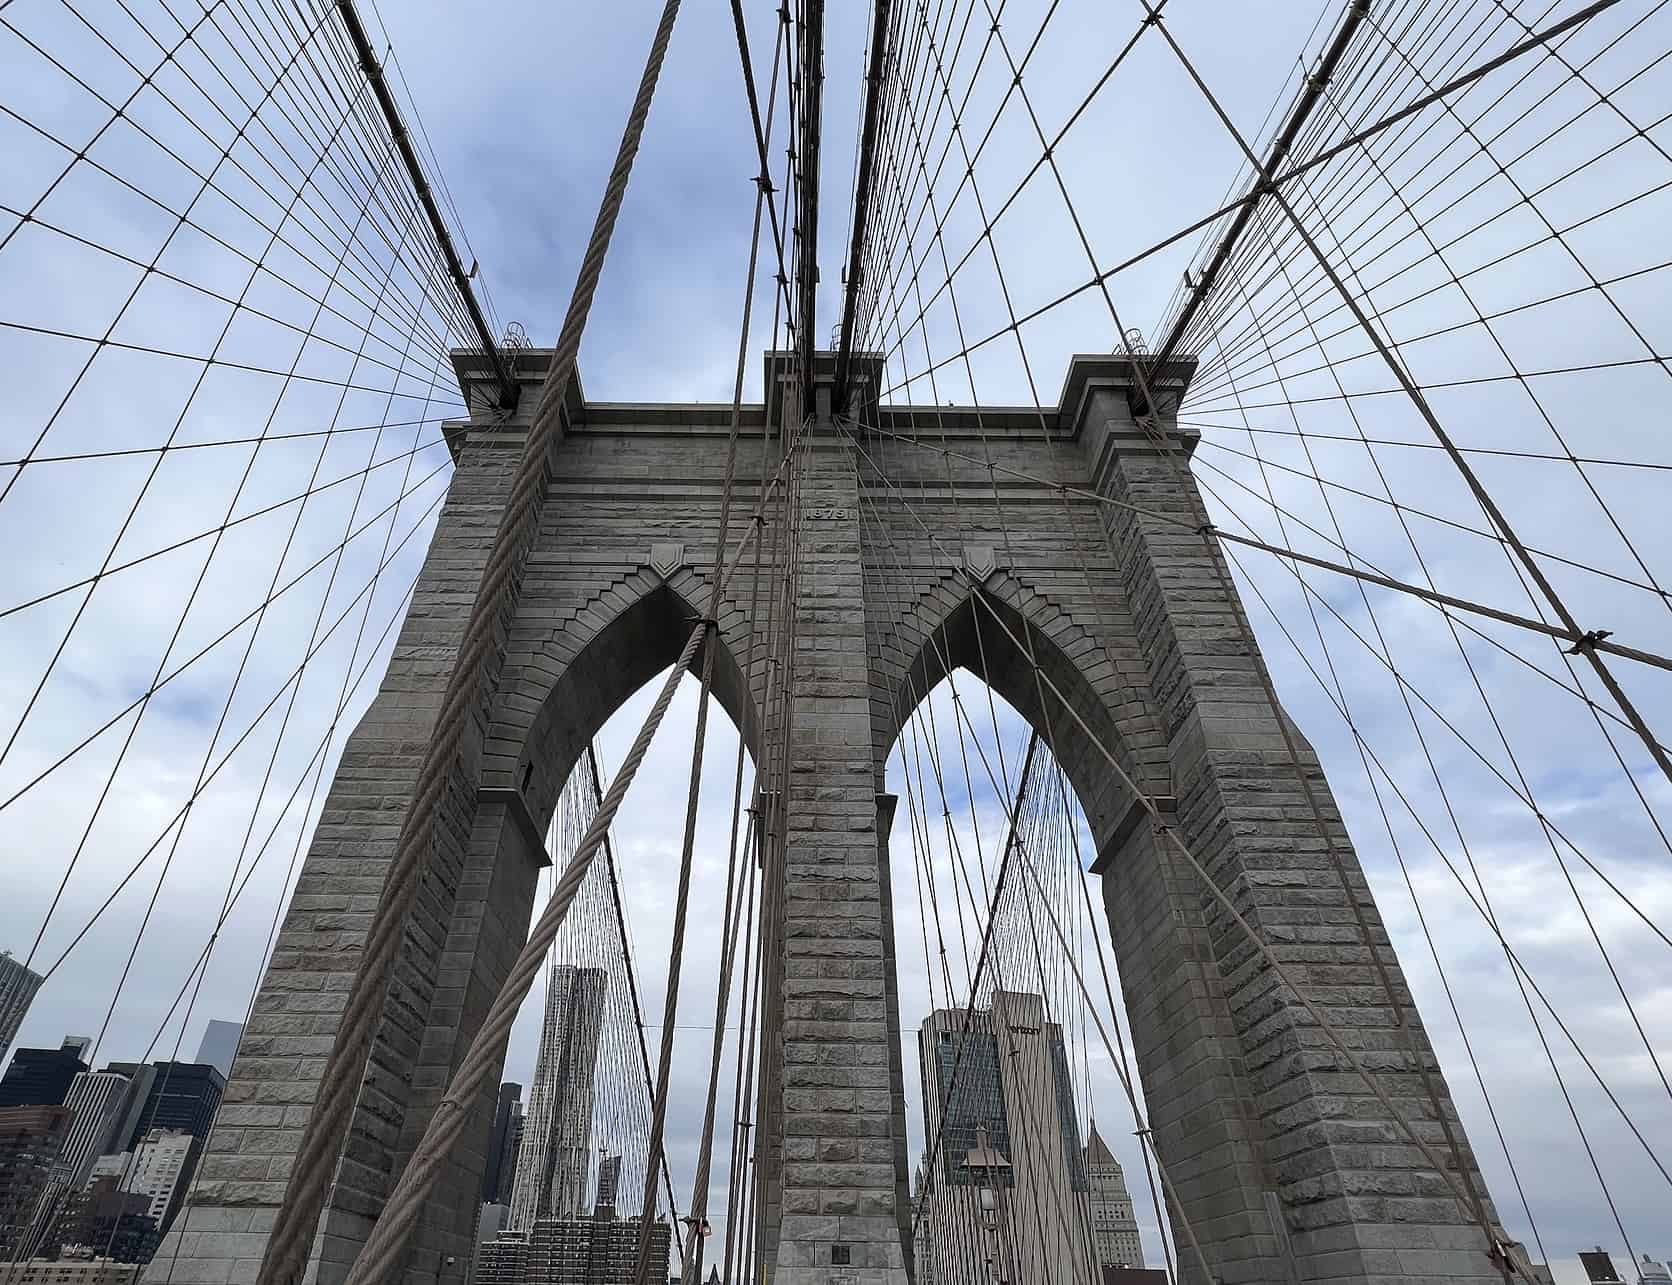 Brooklyn Bridge mit Stahlseil-Konstruktion - New York City, USA.